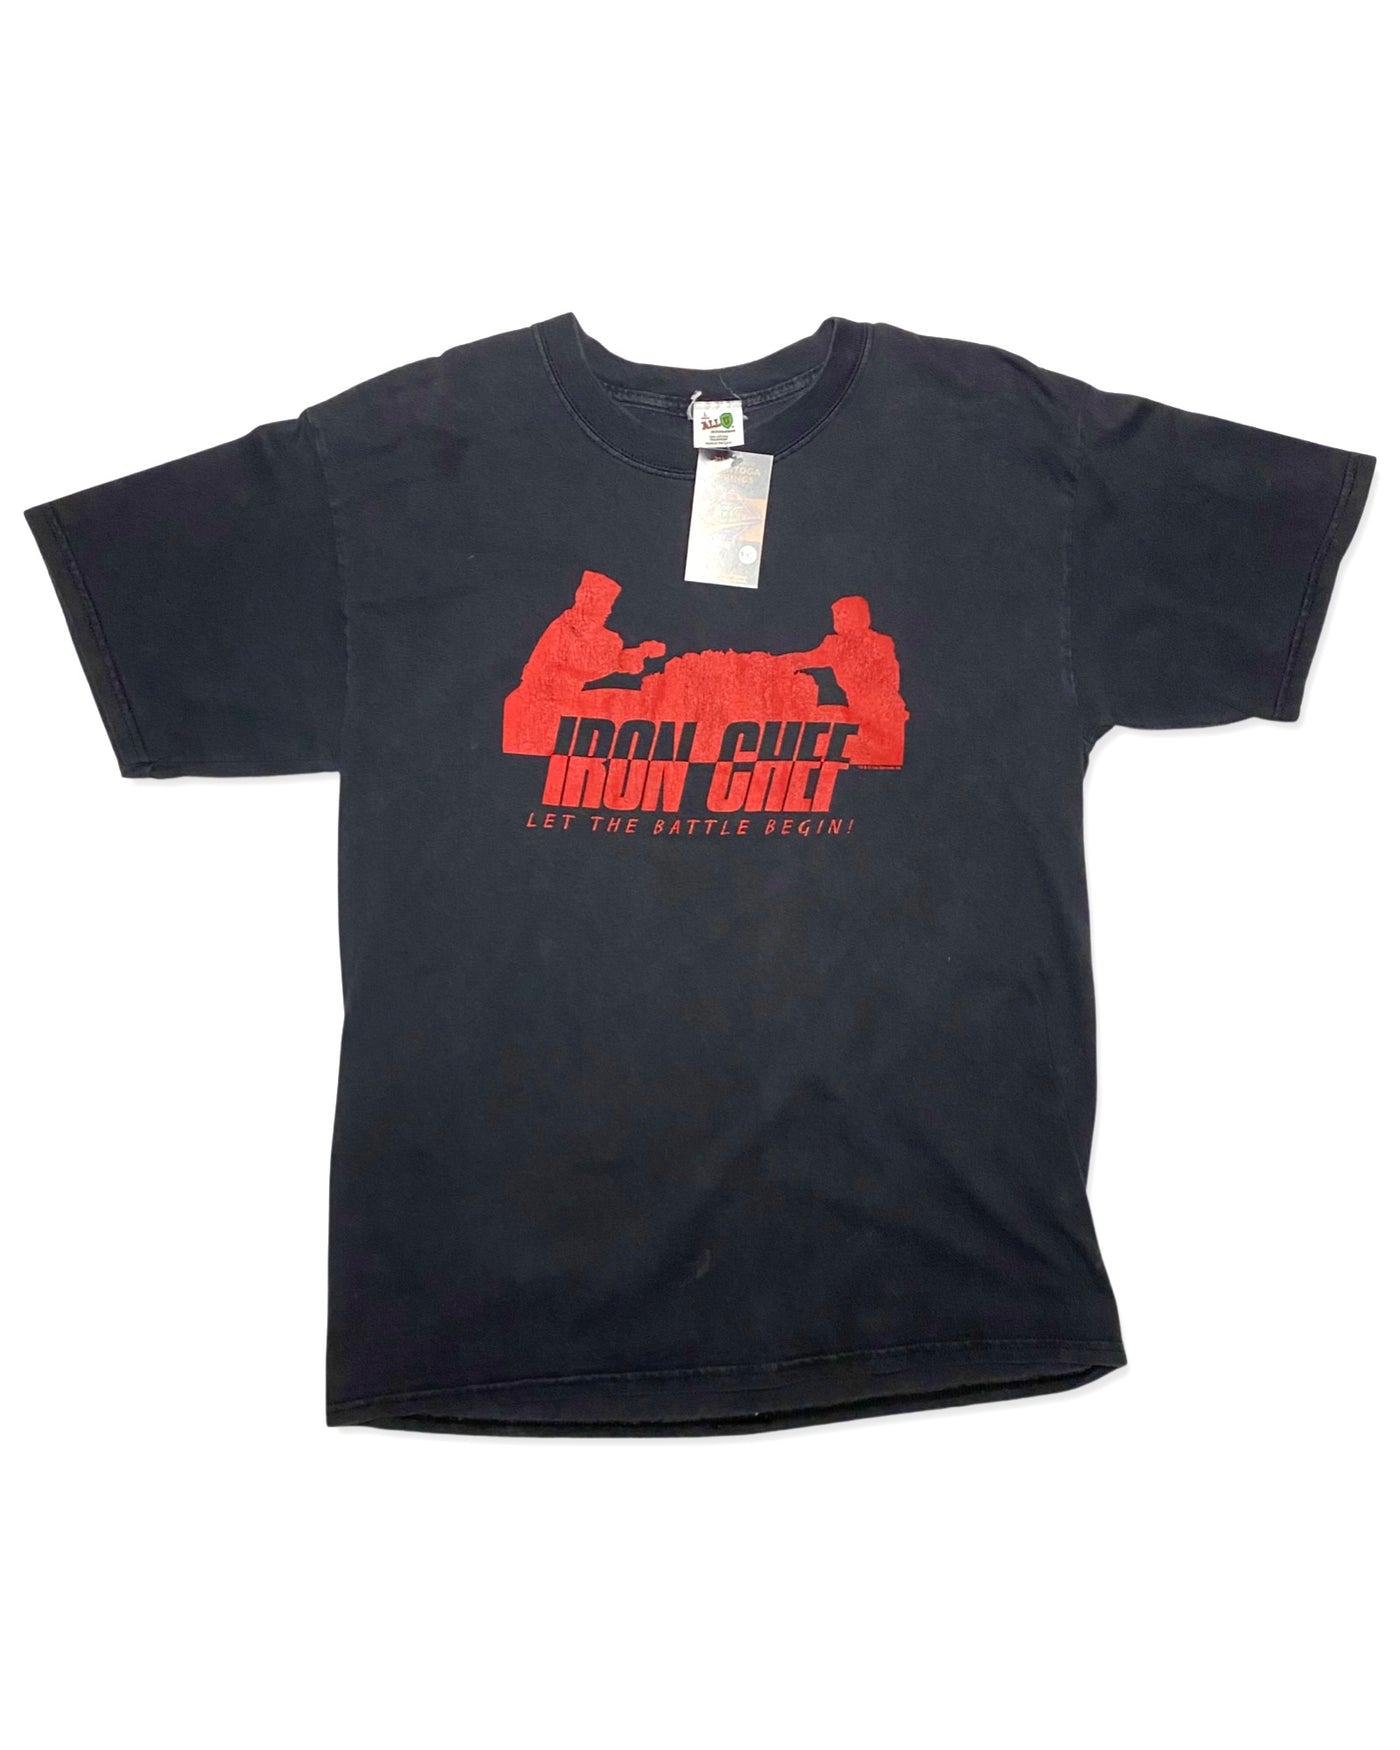 2005 Iron Chef Promo T-Shirt